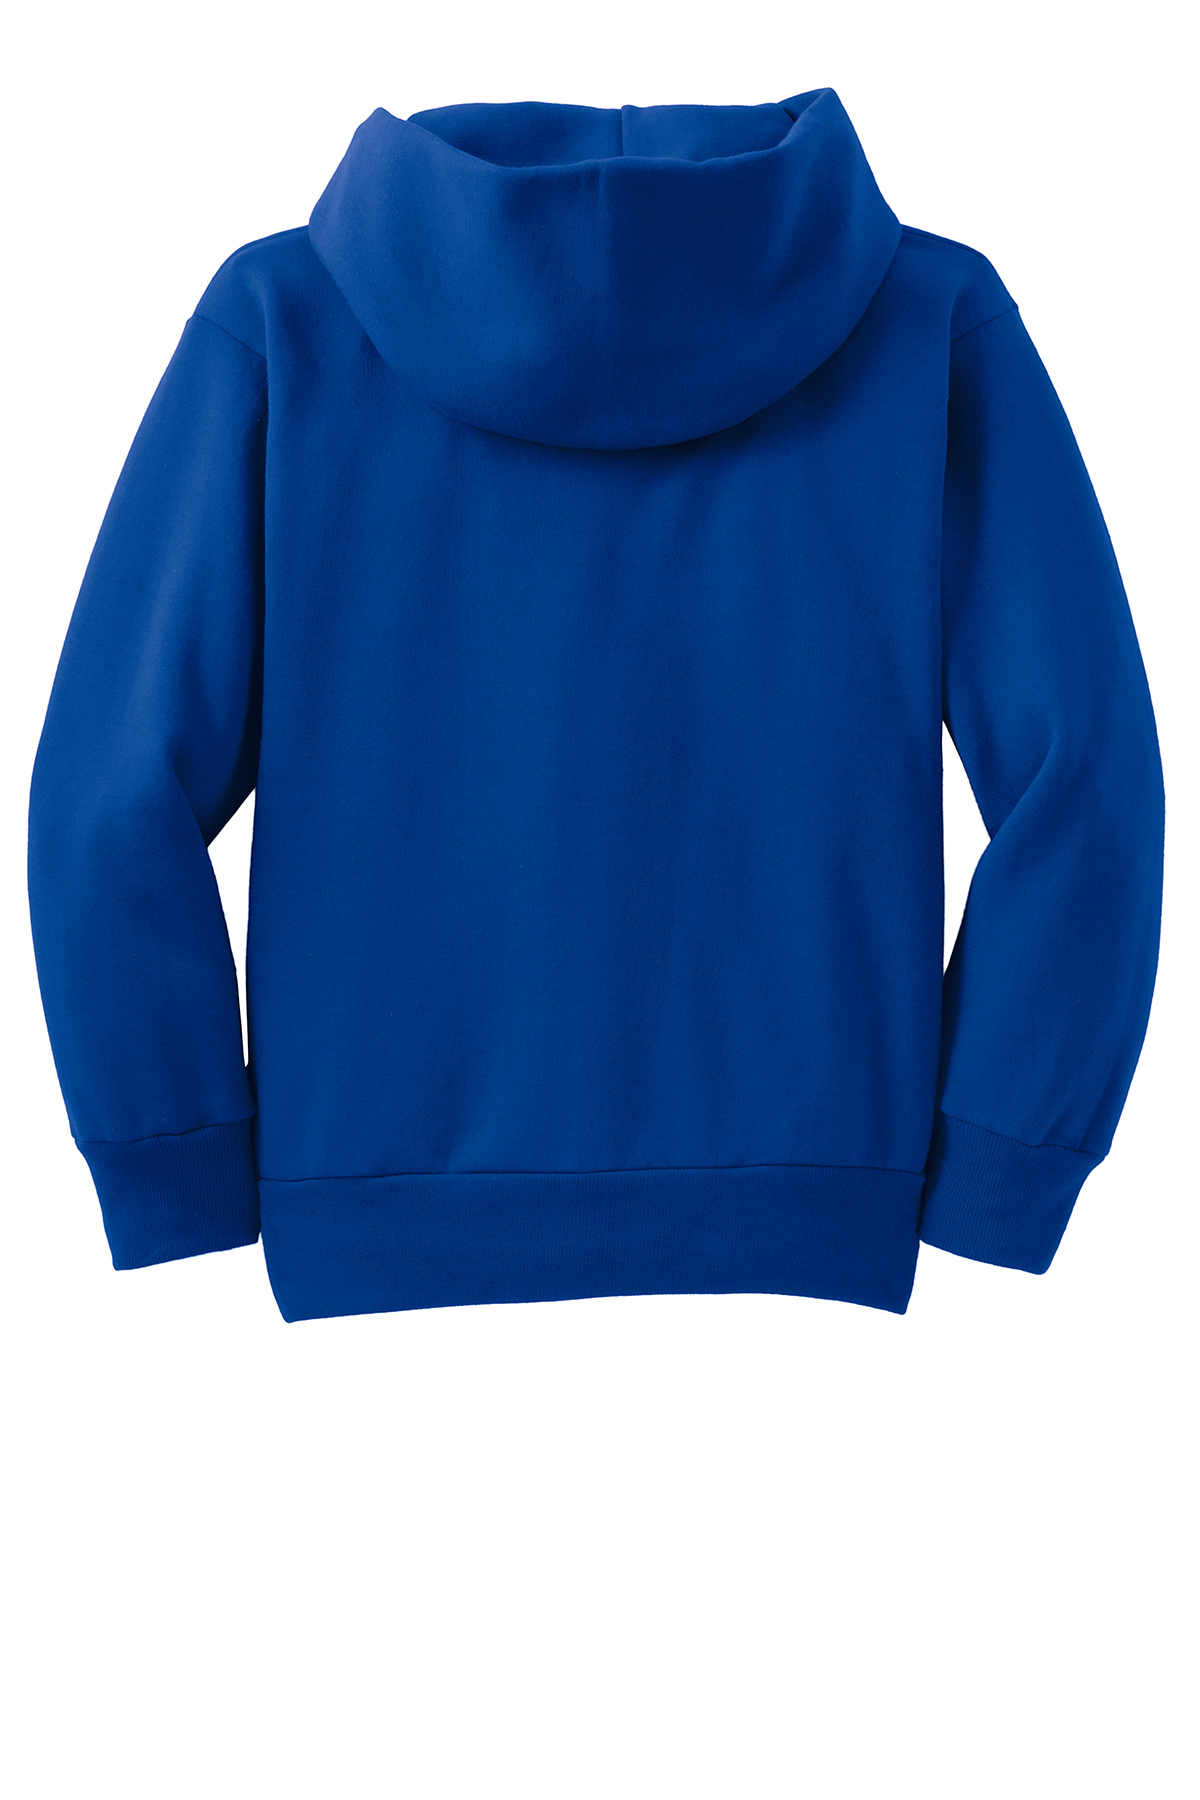 Hanes - Youth EcoSmart Pullover Hooded Sweatshirt, Product